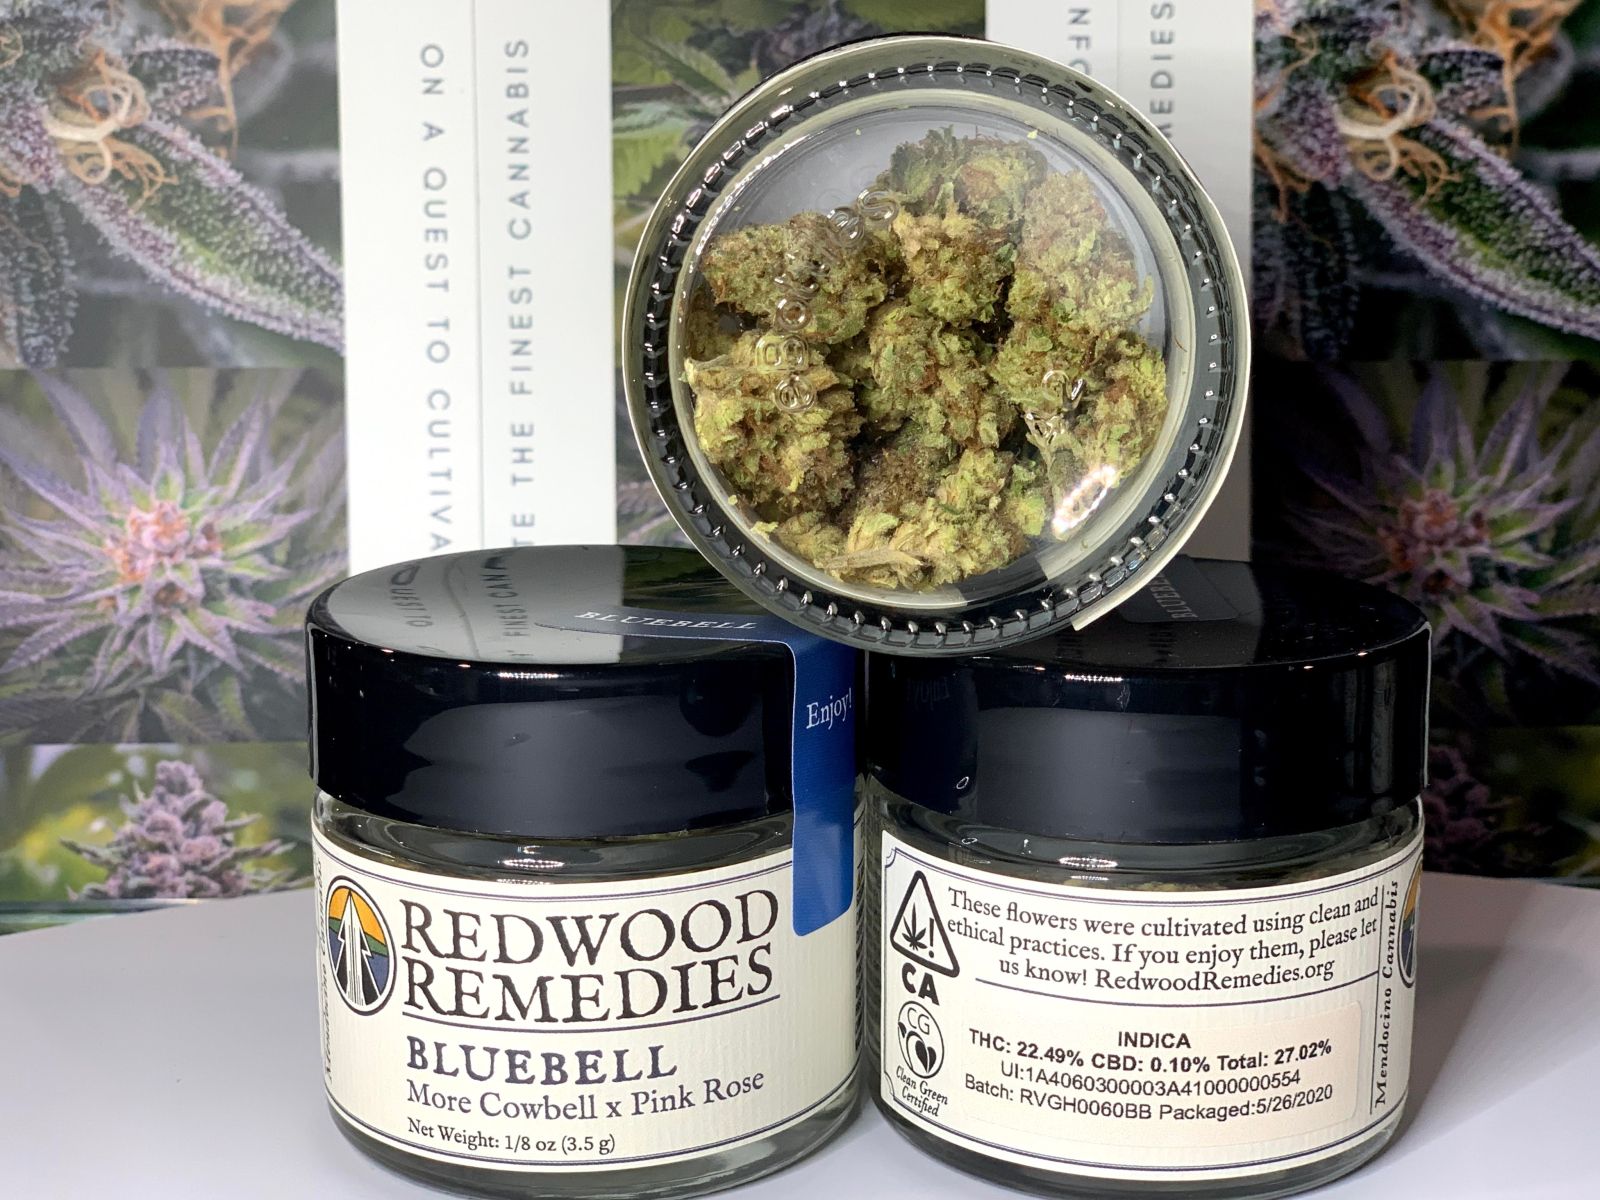 Redwood Remedies Bluebell 3.5g